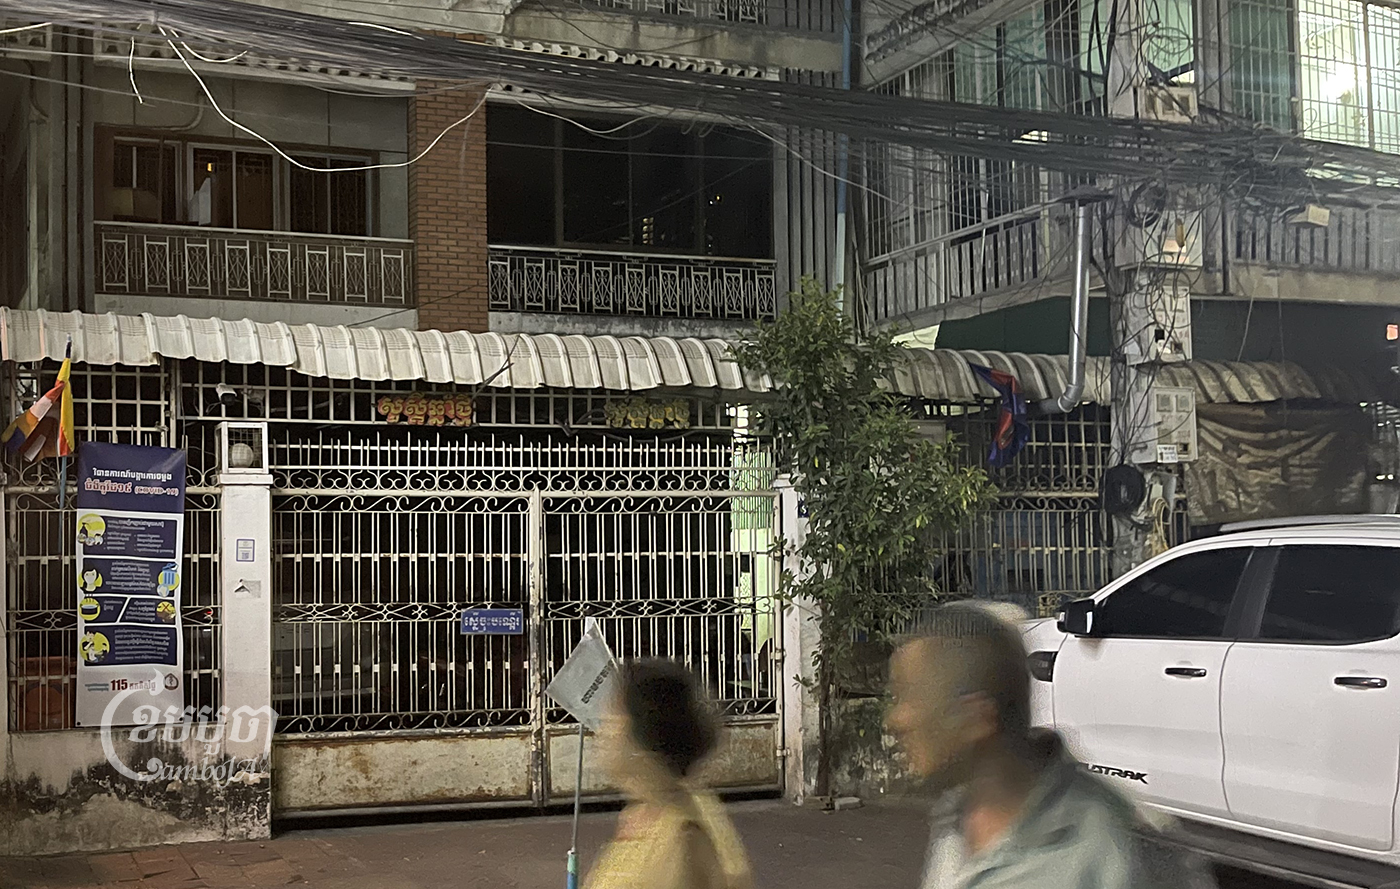 Prime Minister Hun Sen Shuts Down Independent Media VOD CamboJA News